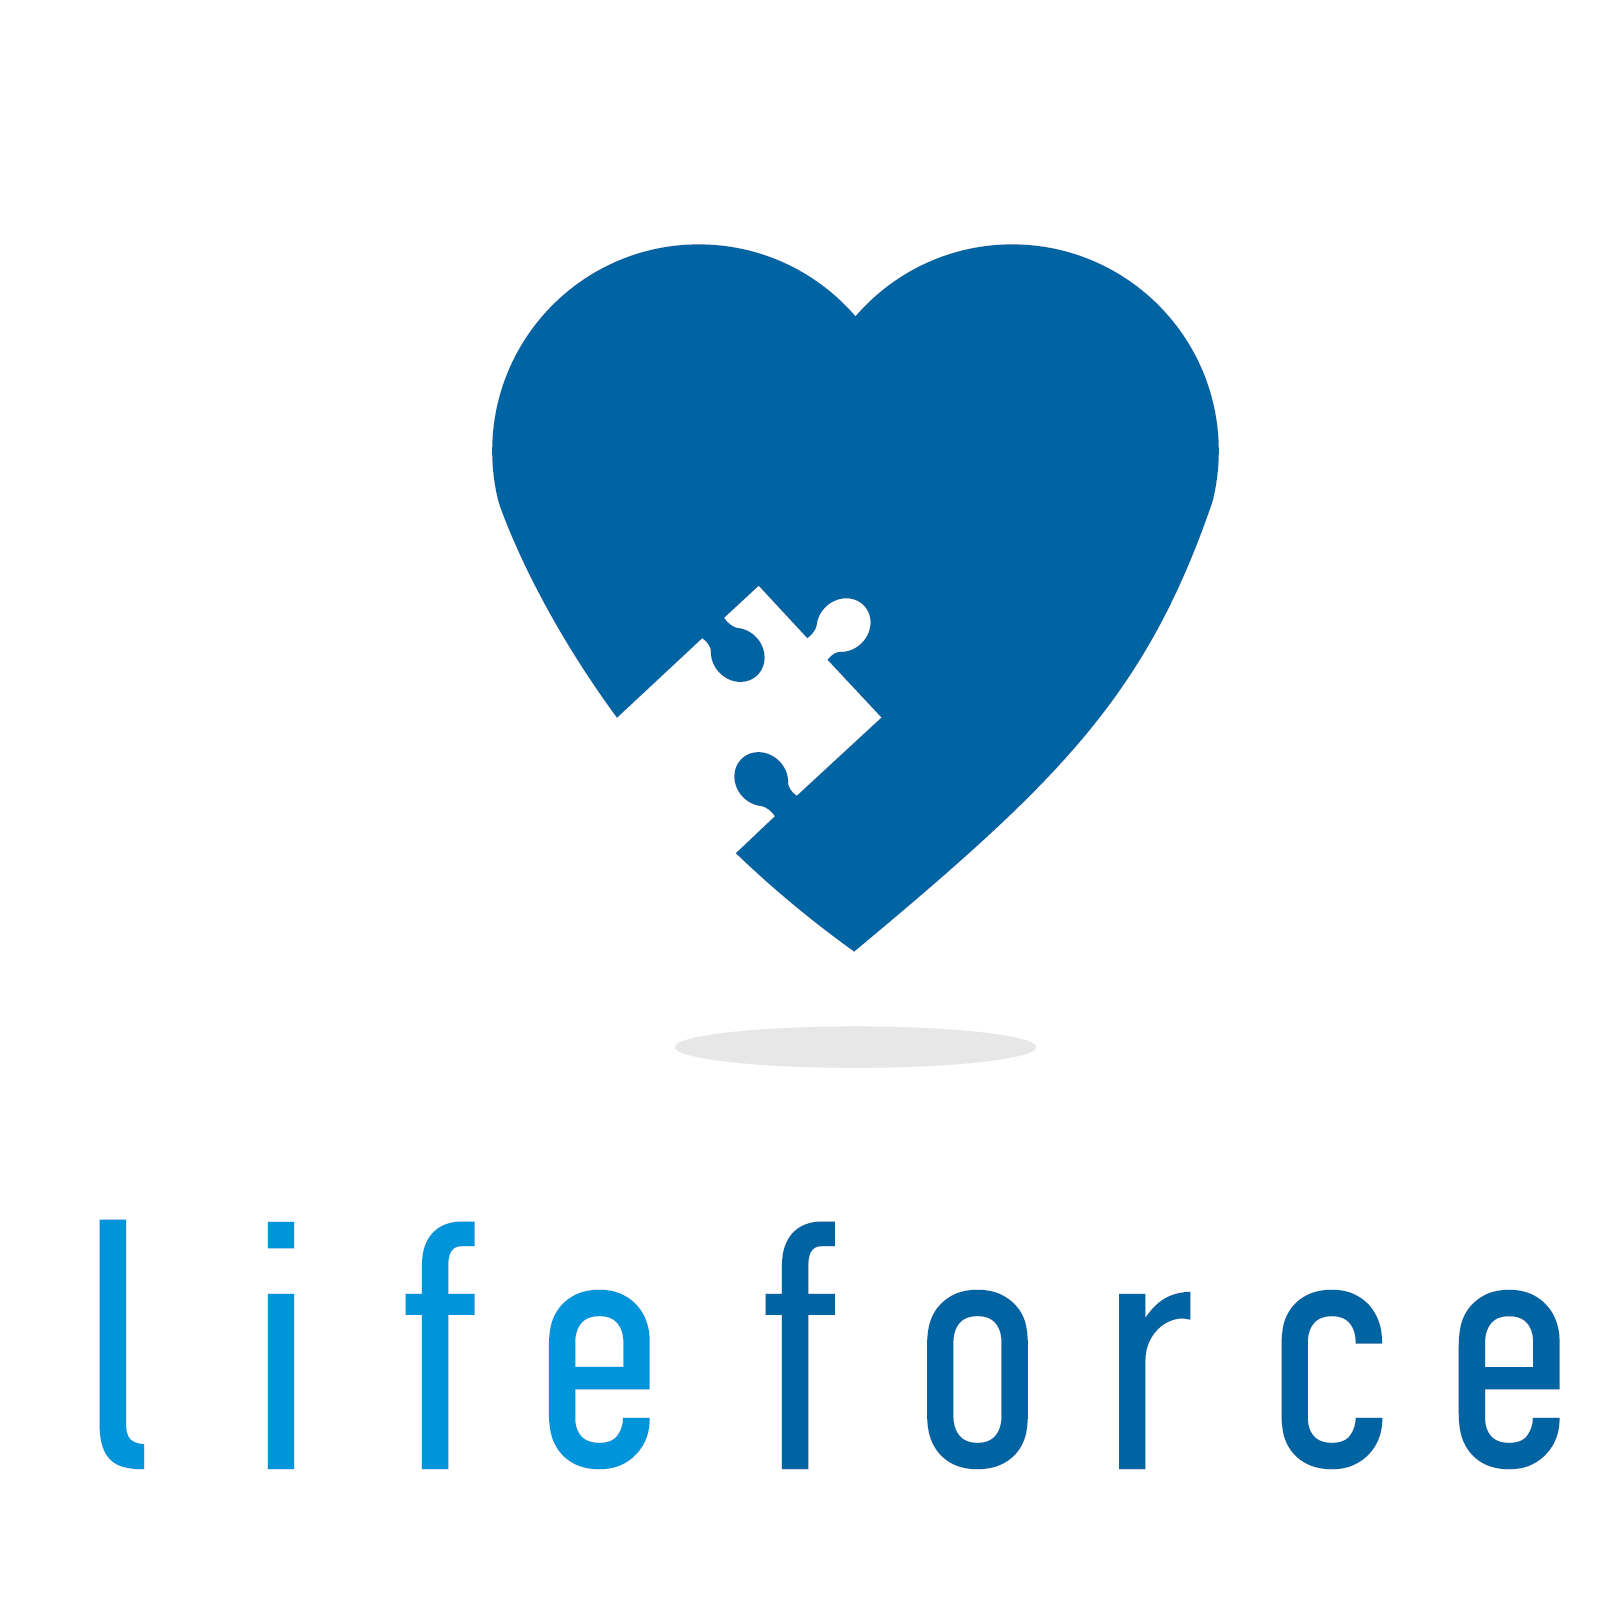 Project LIFEFORCE